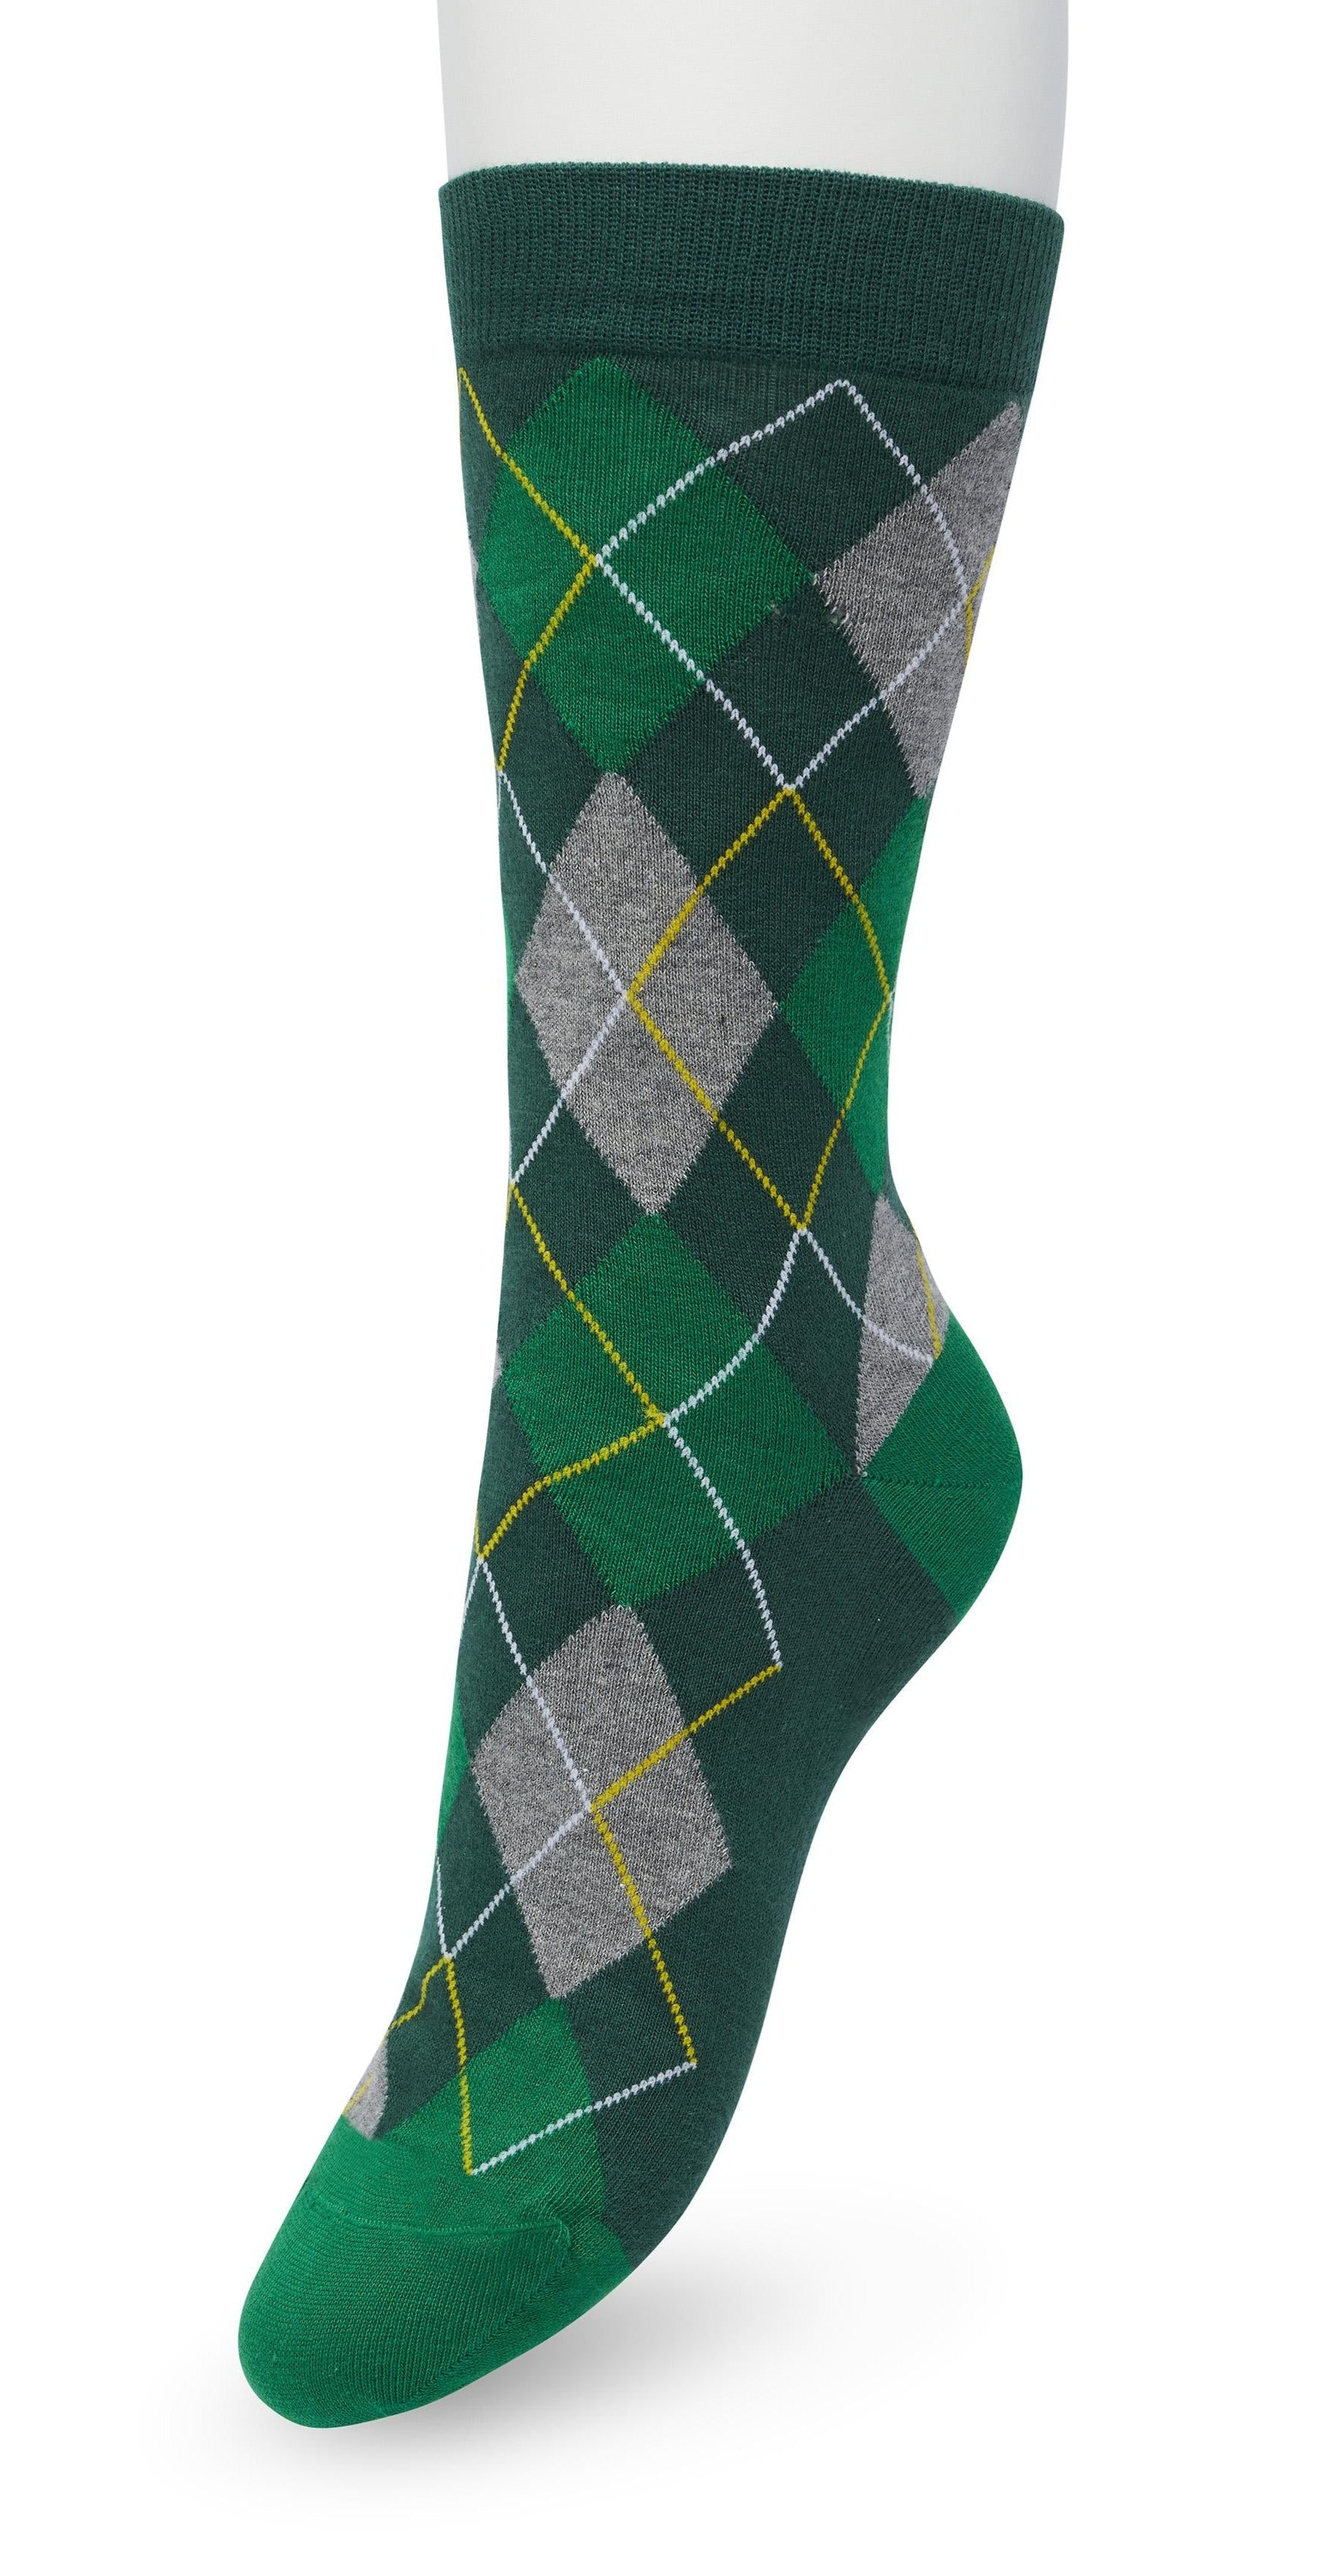 Bonnie Doon BP211122 Argyle Sock - Emerald green, grey and yellow cotton ankle socks with a golf style diamond argyle tartan check pattern.